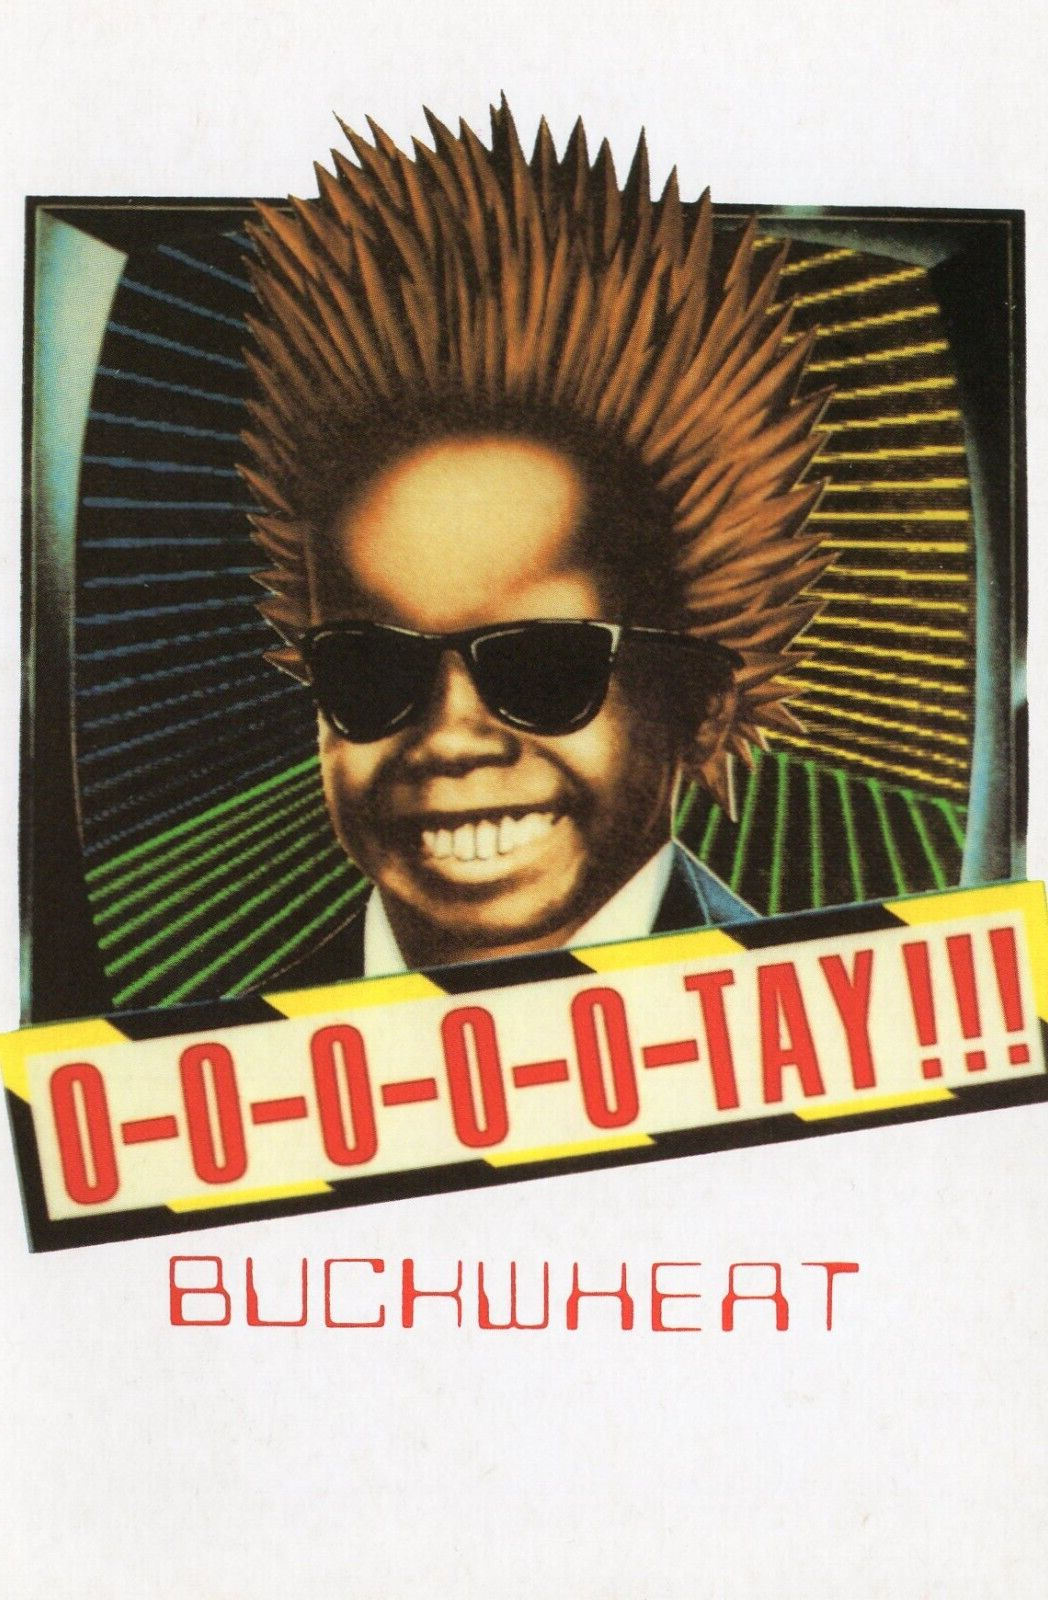 O-O-O- TAY  Buckwheat Max Headroom 1987 Mash up The Little Rascals & King World